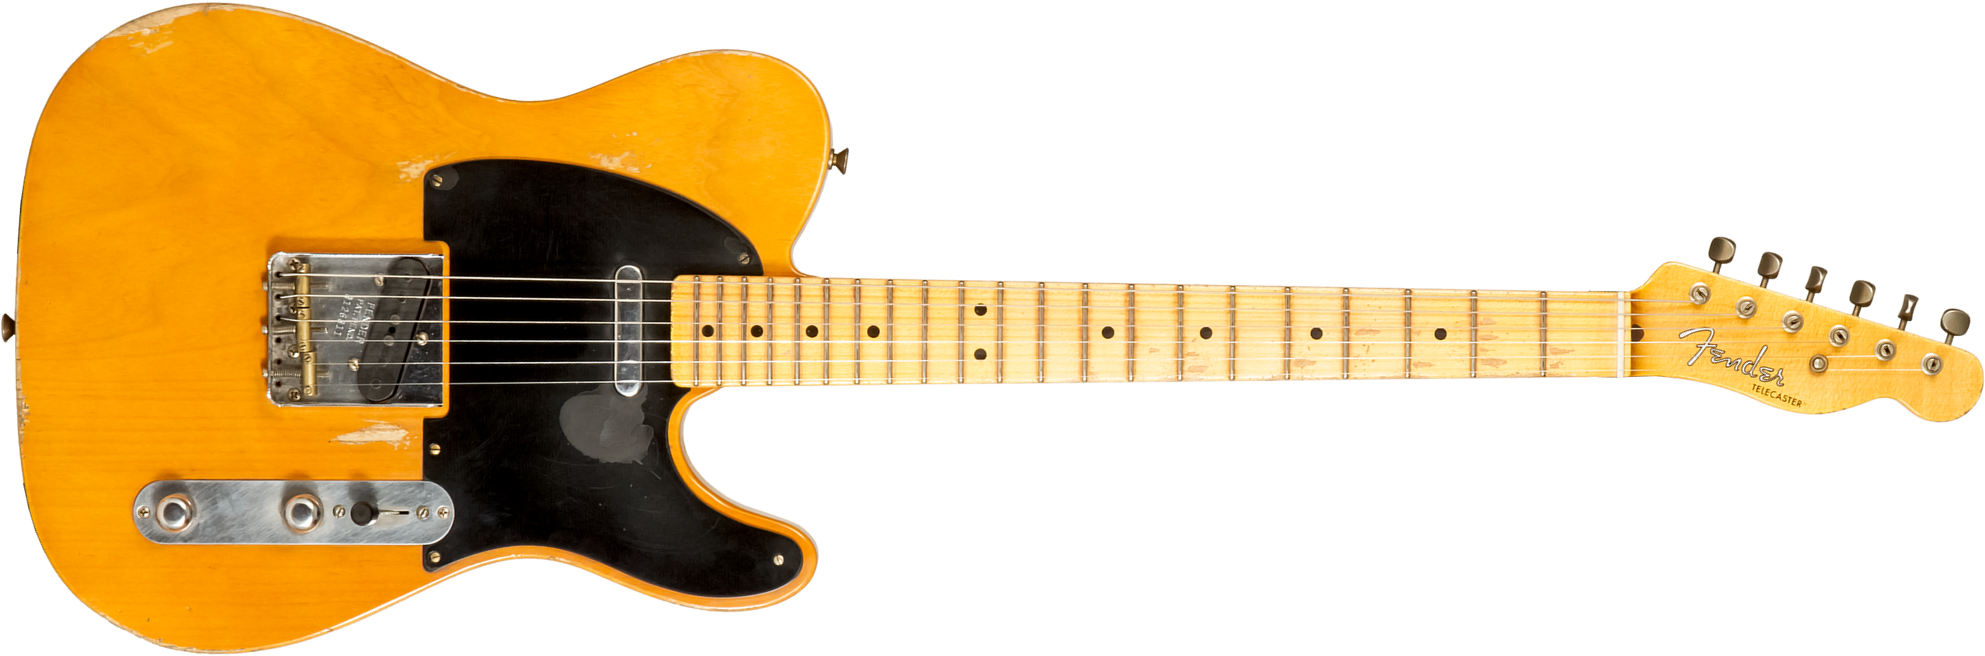 Fender Custom Shop Tele 1952 Masterbuilt A.hicks 2s Ht Mn #r126811 - Relic Smoked Butterscotch Blonde - Televorm elektrische gitaar - Main picture